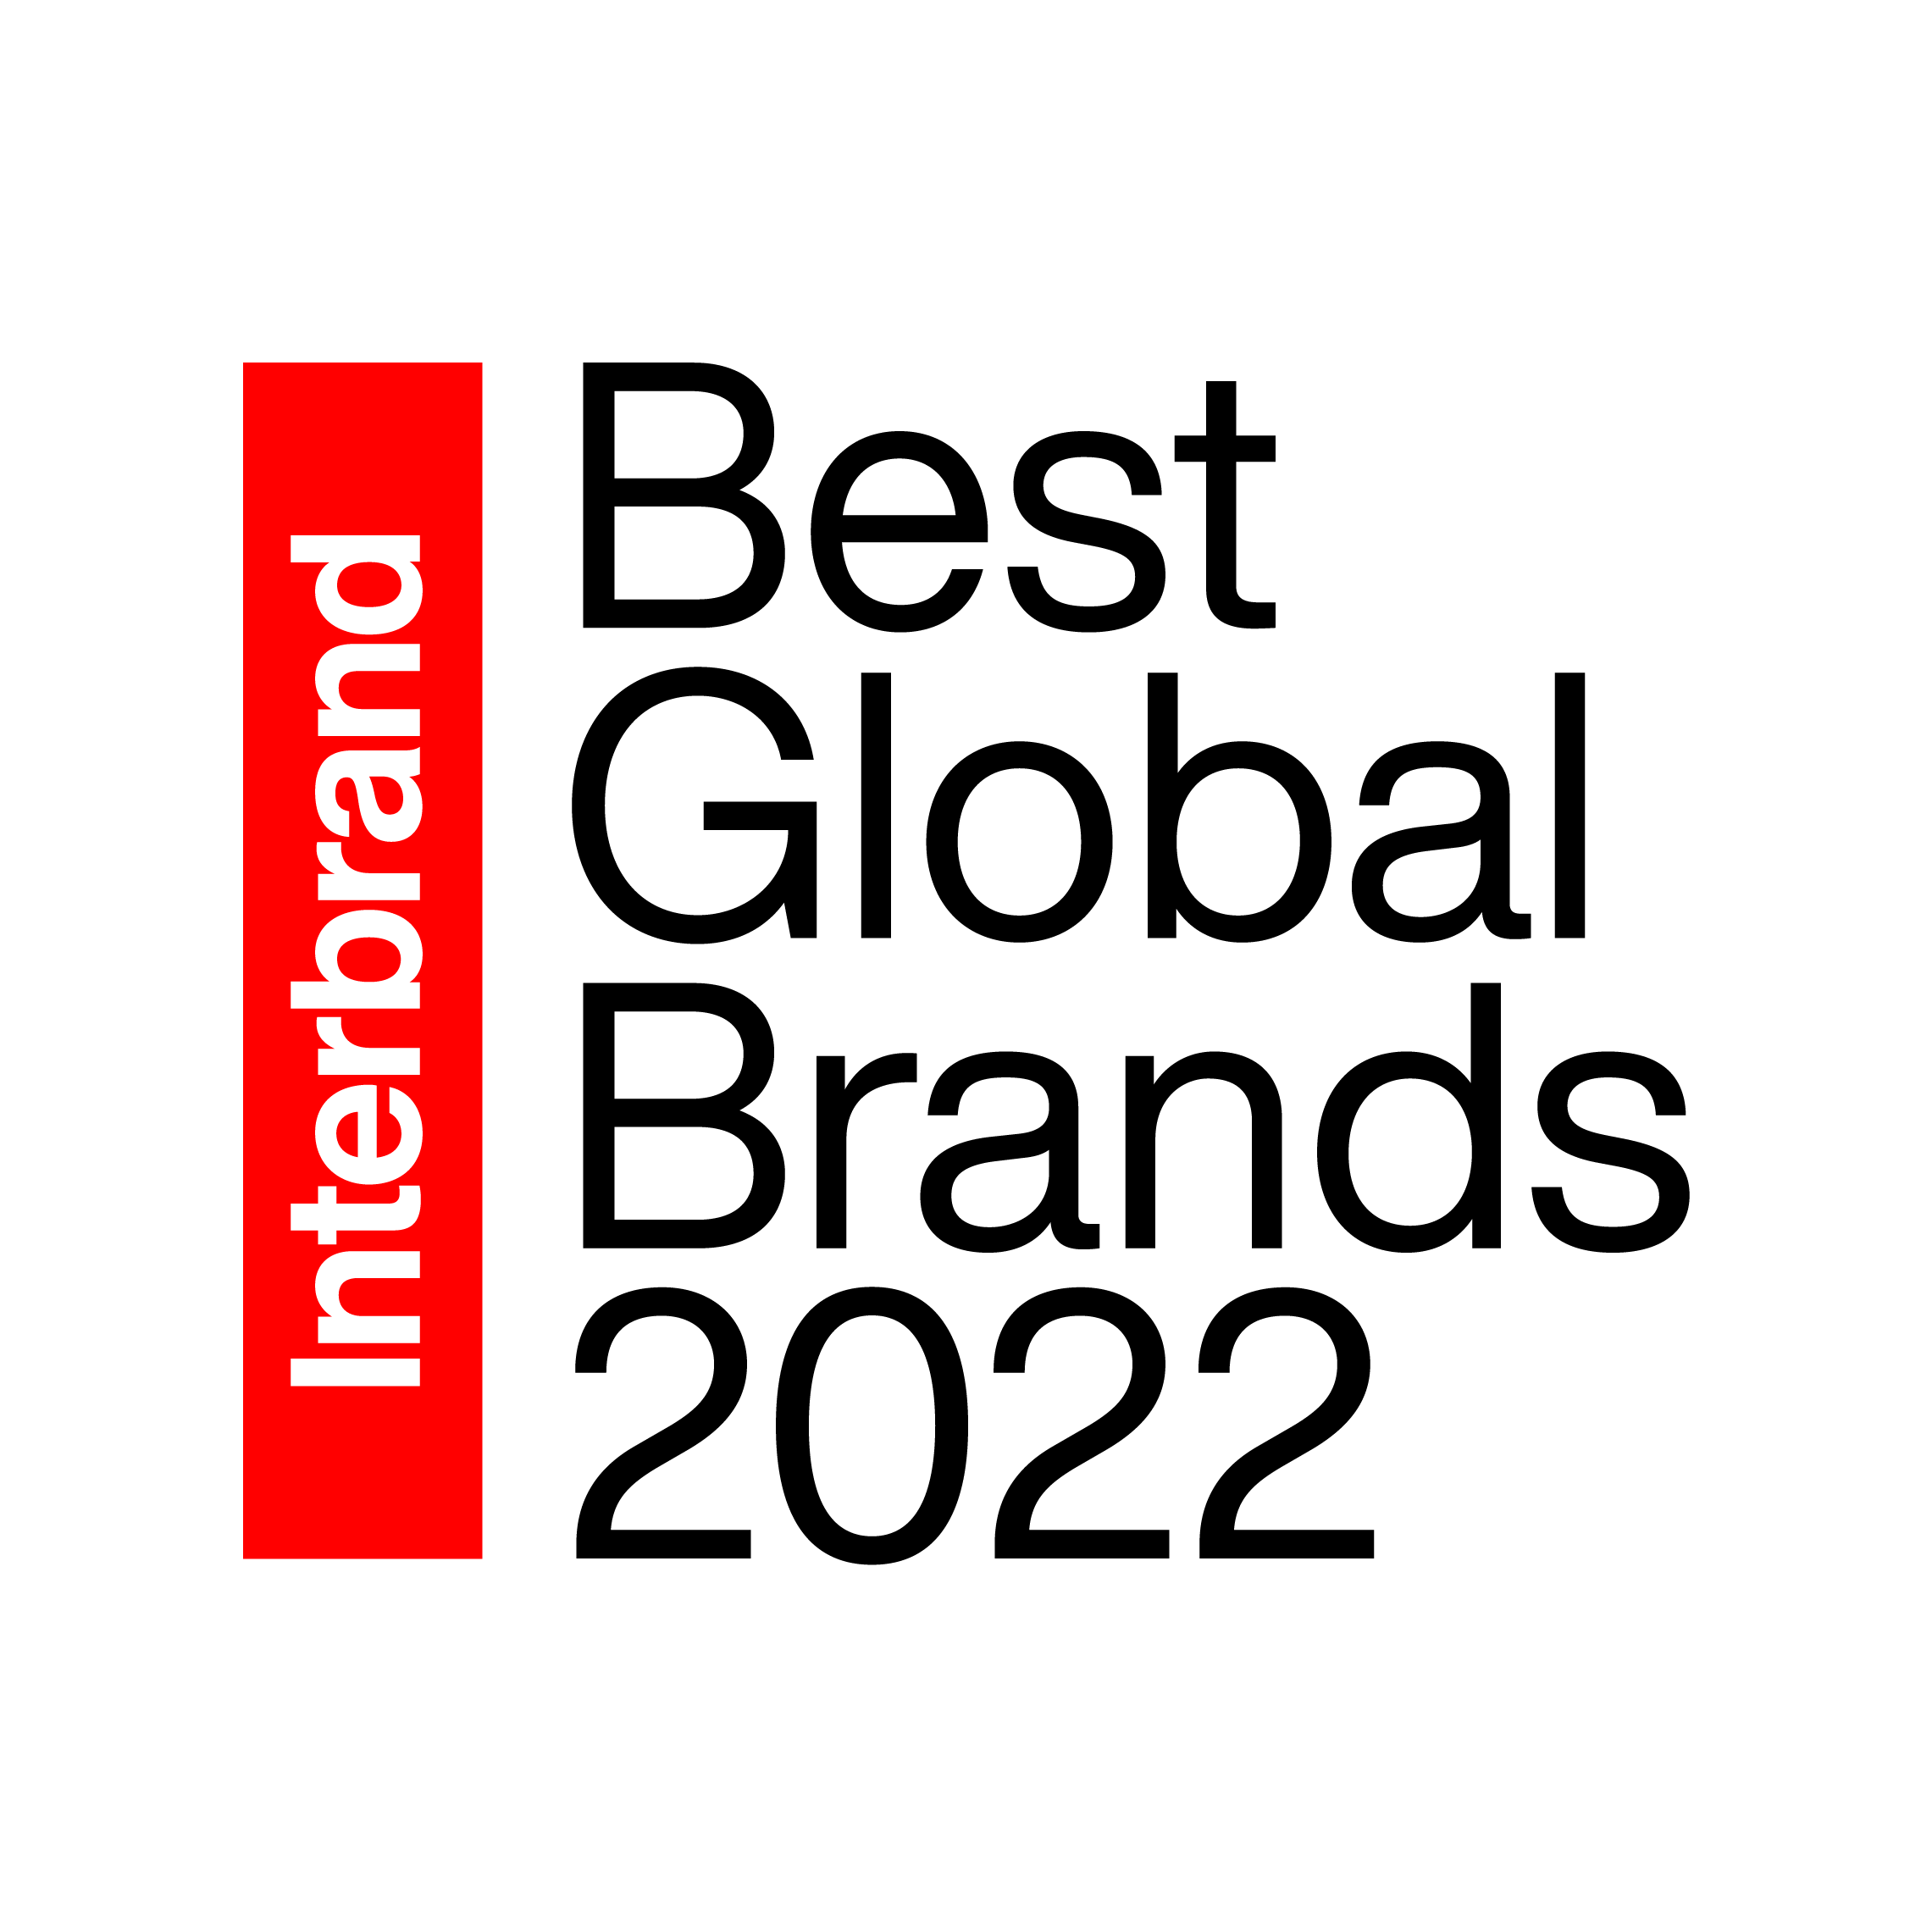 The Best Brands of Handbags - Global Brands Magazine